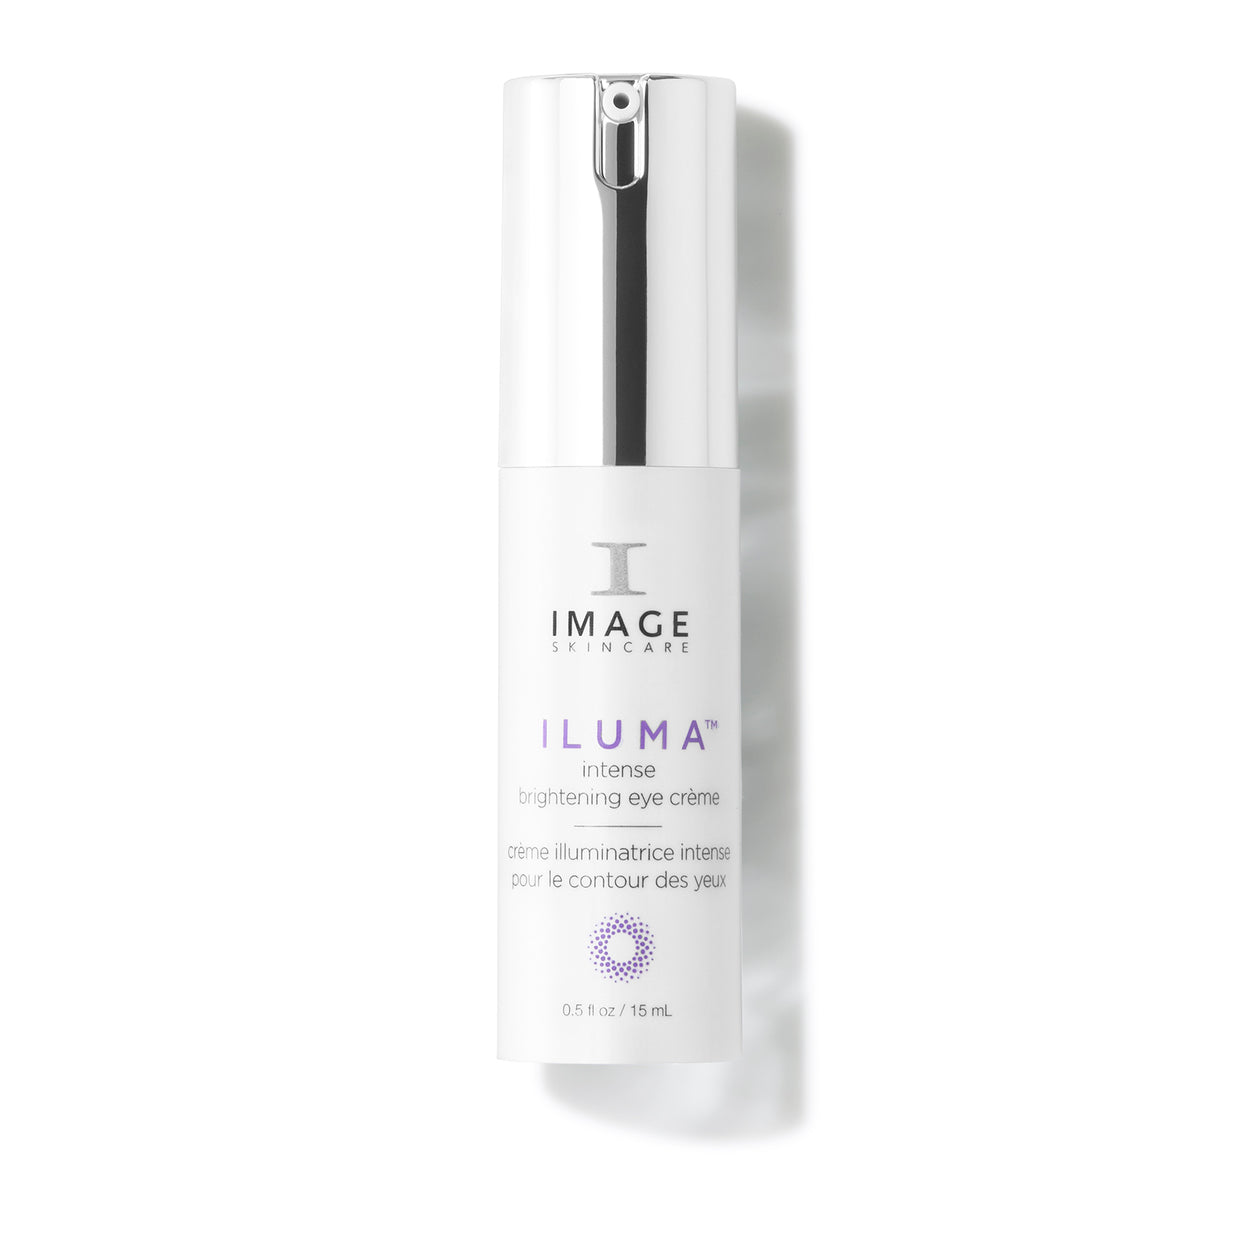 Image Skincare Iluma Intense Brightening Eye Creme Shop At Exclusive Beauty